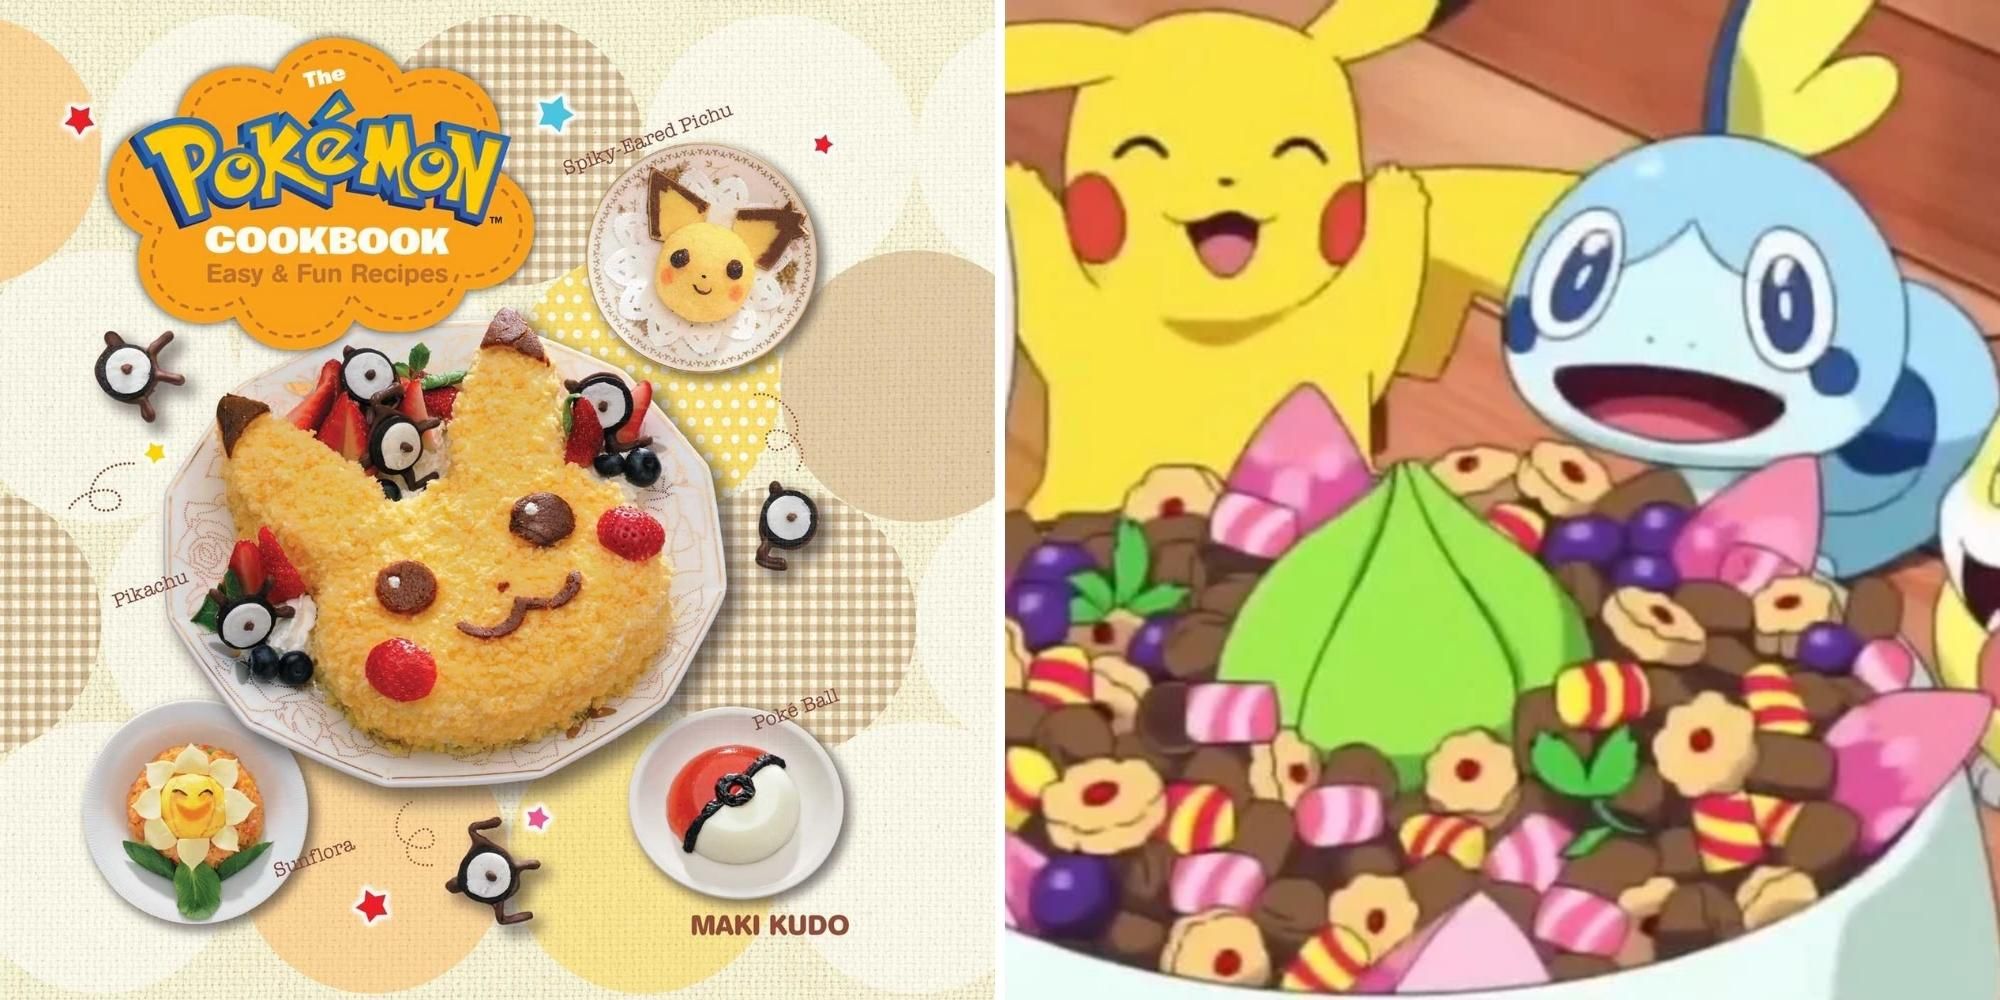 The Pokémon Cookbook Easy & Fun Recipes and Pokemon characters eating